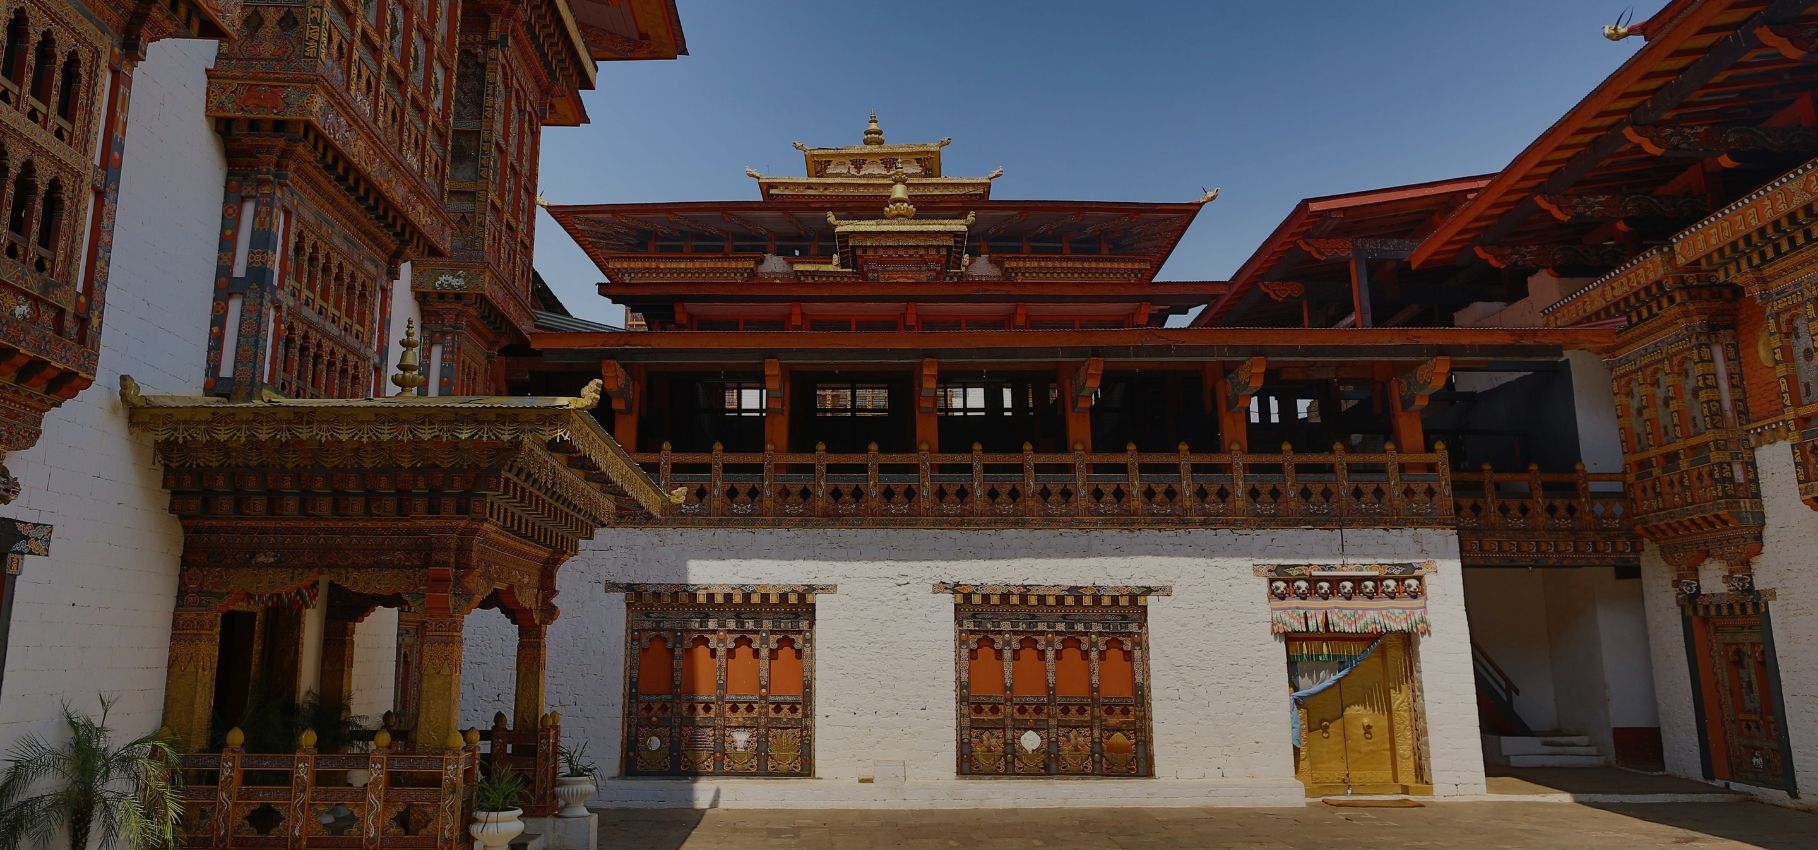 Visiting Phunakha Valley in Bhutan